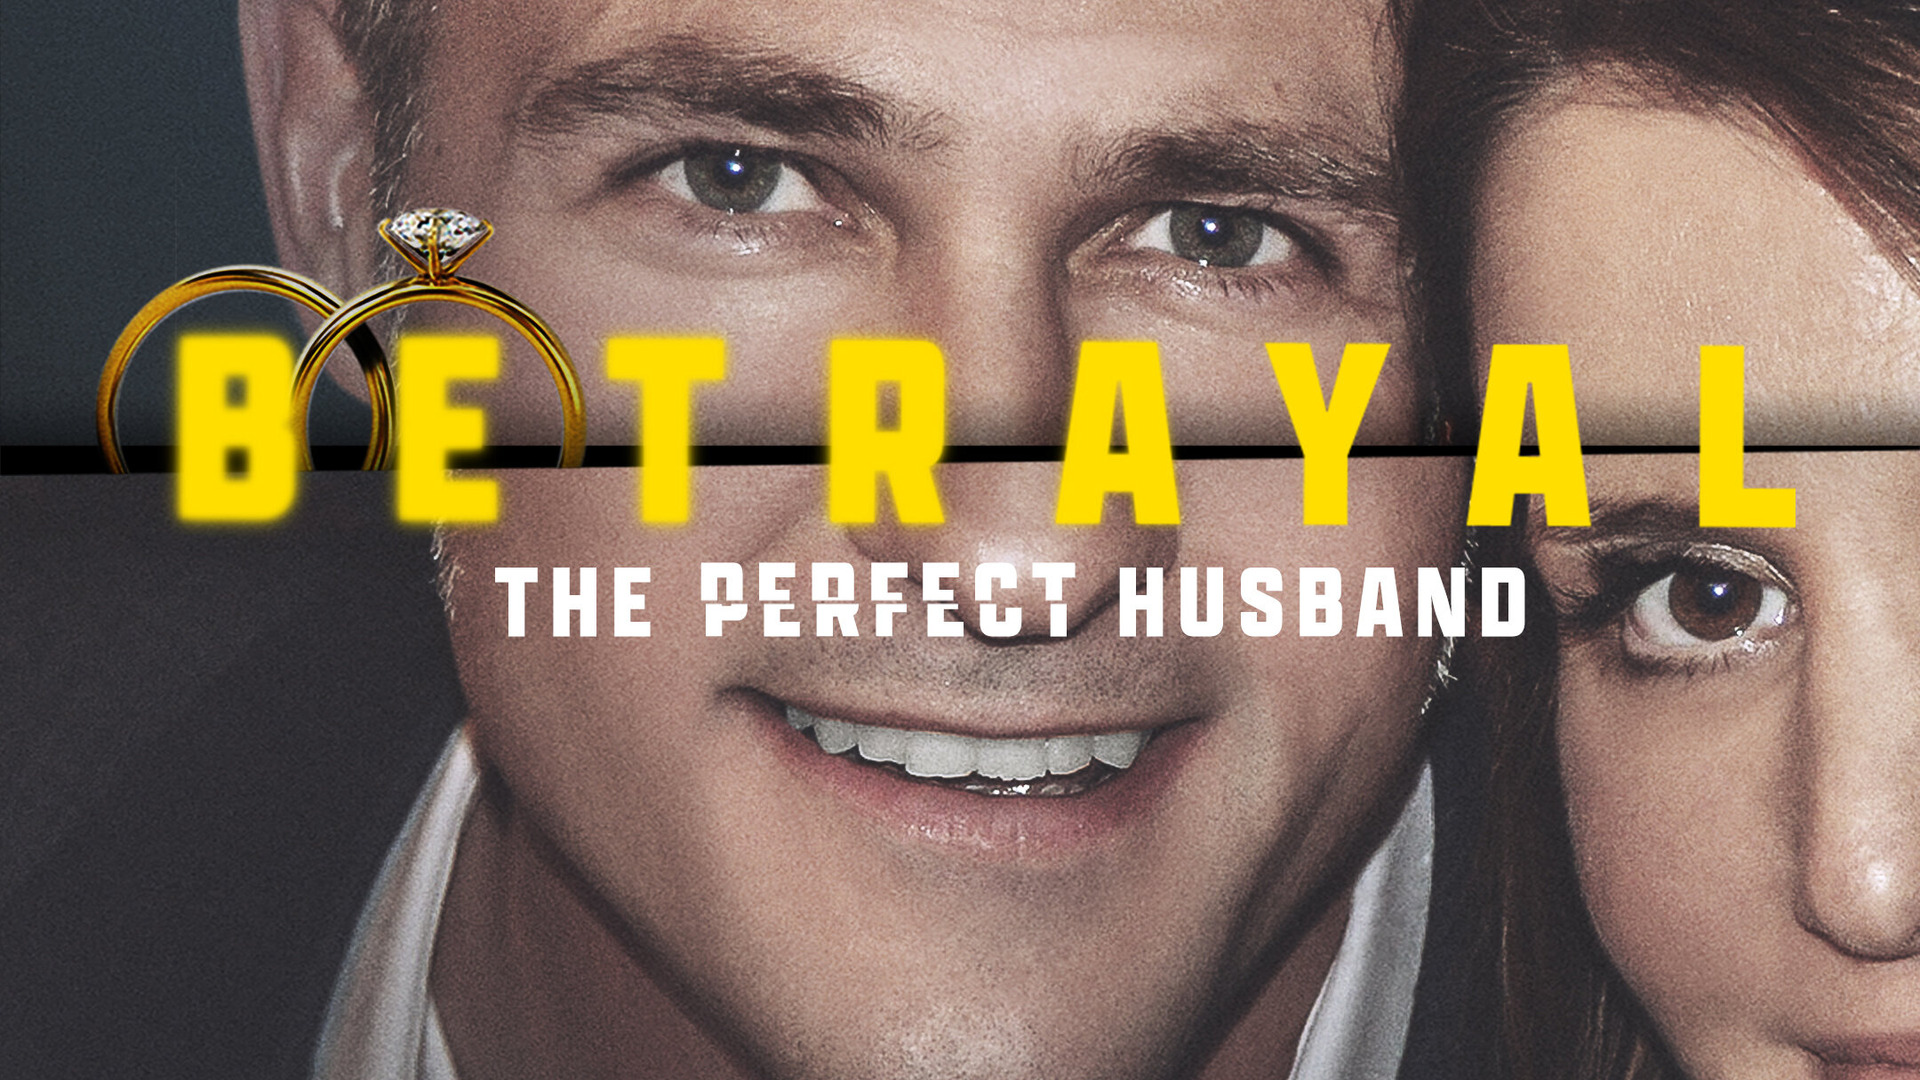 Show Betrayal: The Perfect Husband